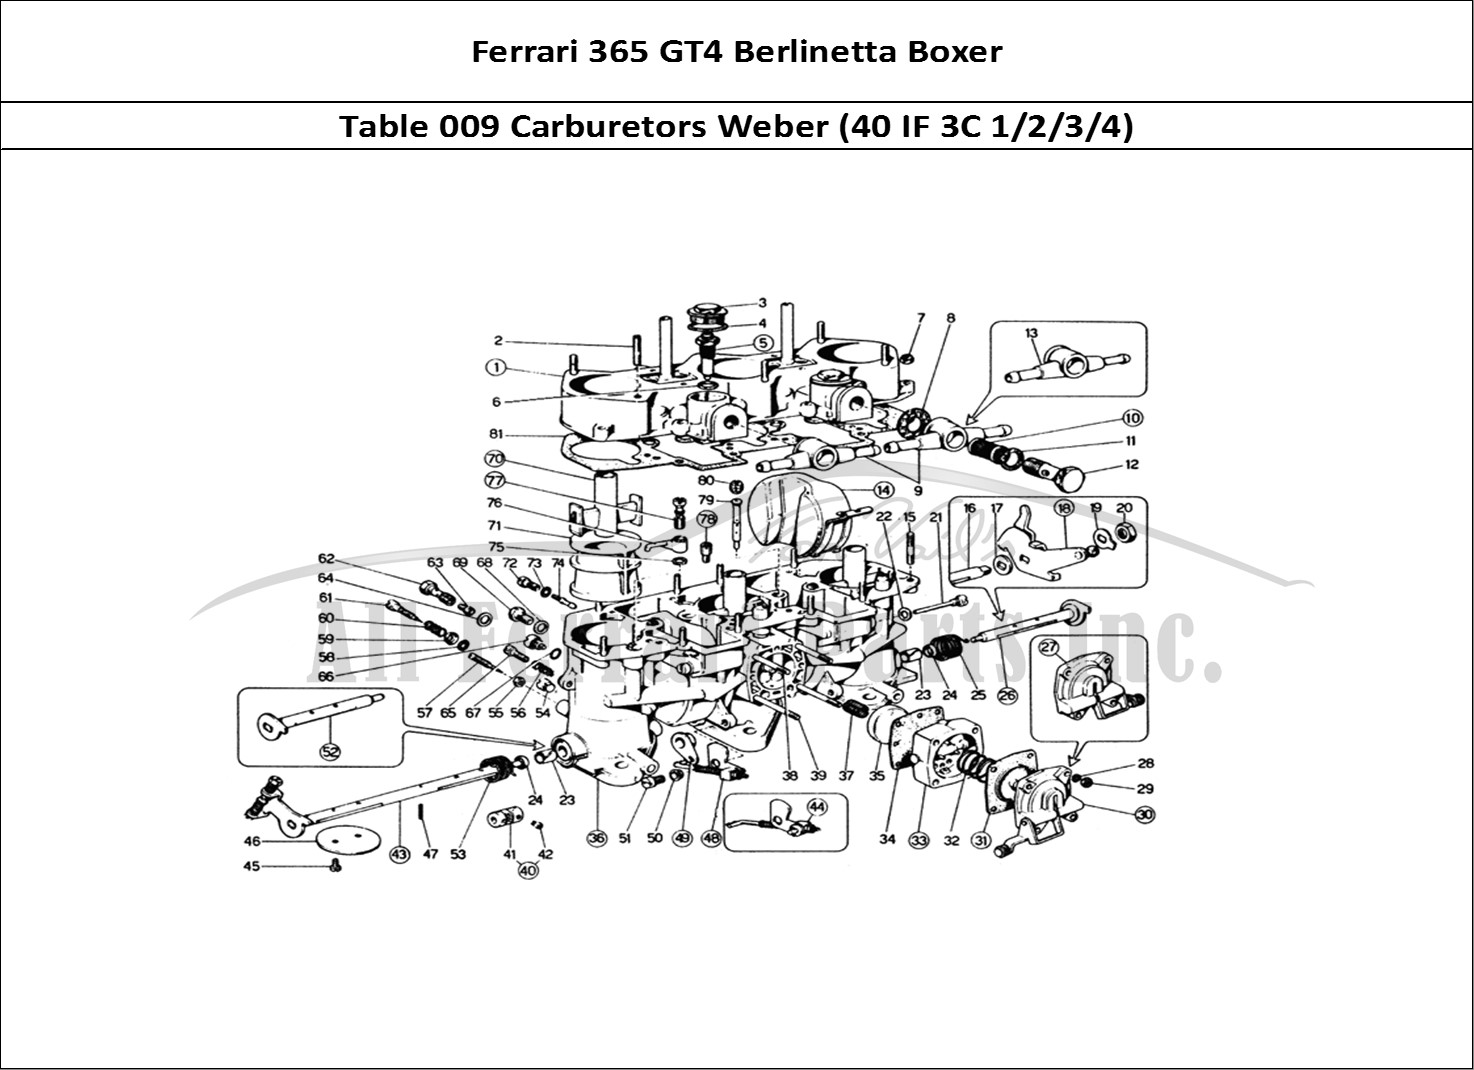 Ferrari Parts Ferrari 365 GT4 Berlinetta Boxer Page 009 Weber Carburettors (40 IF